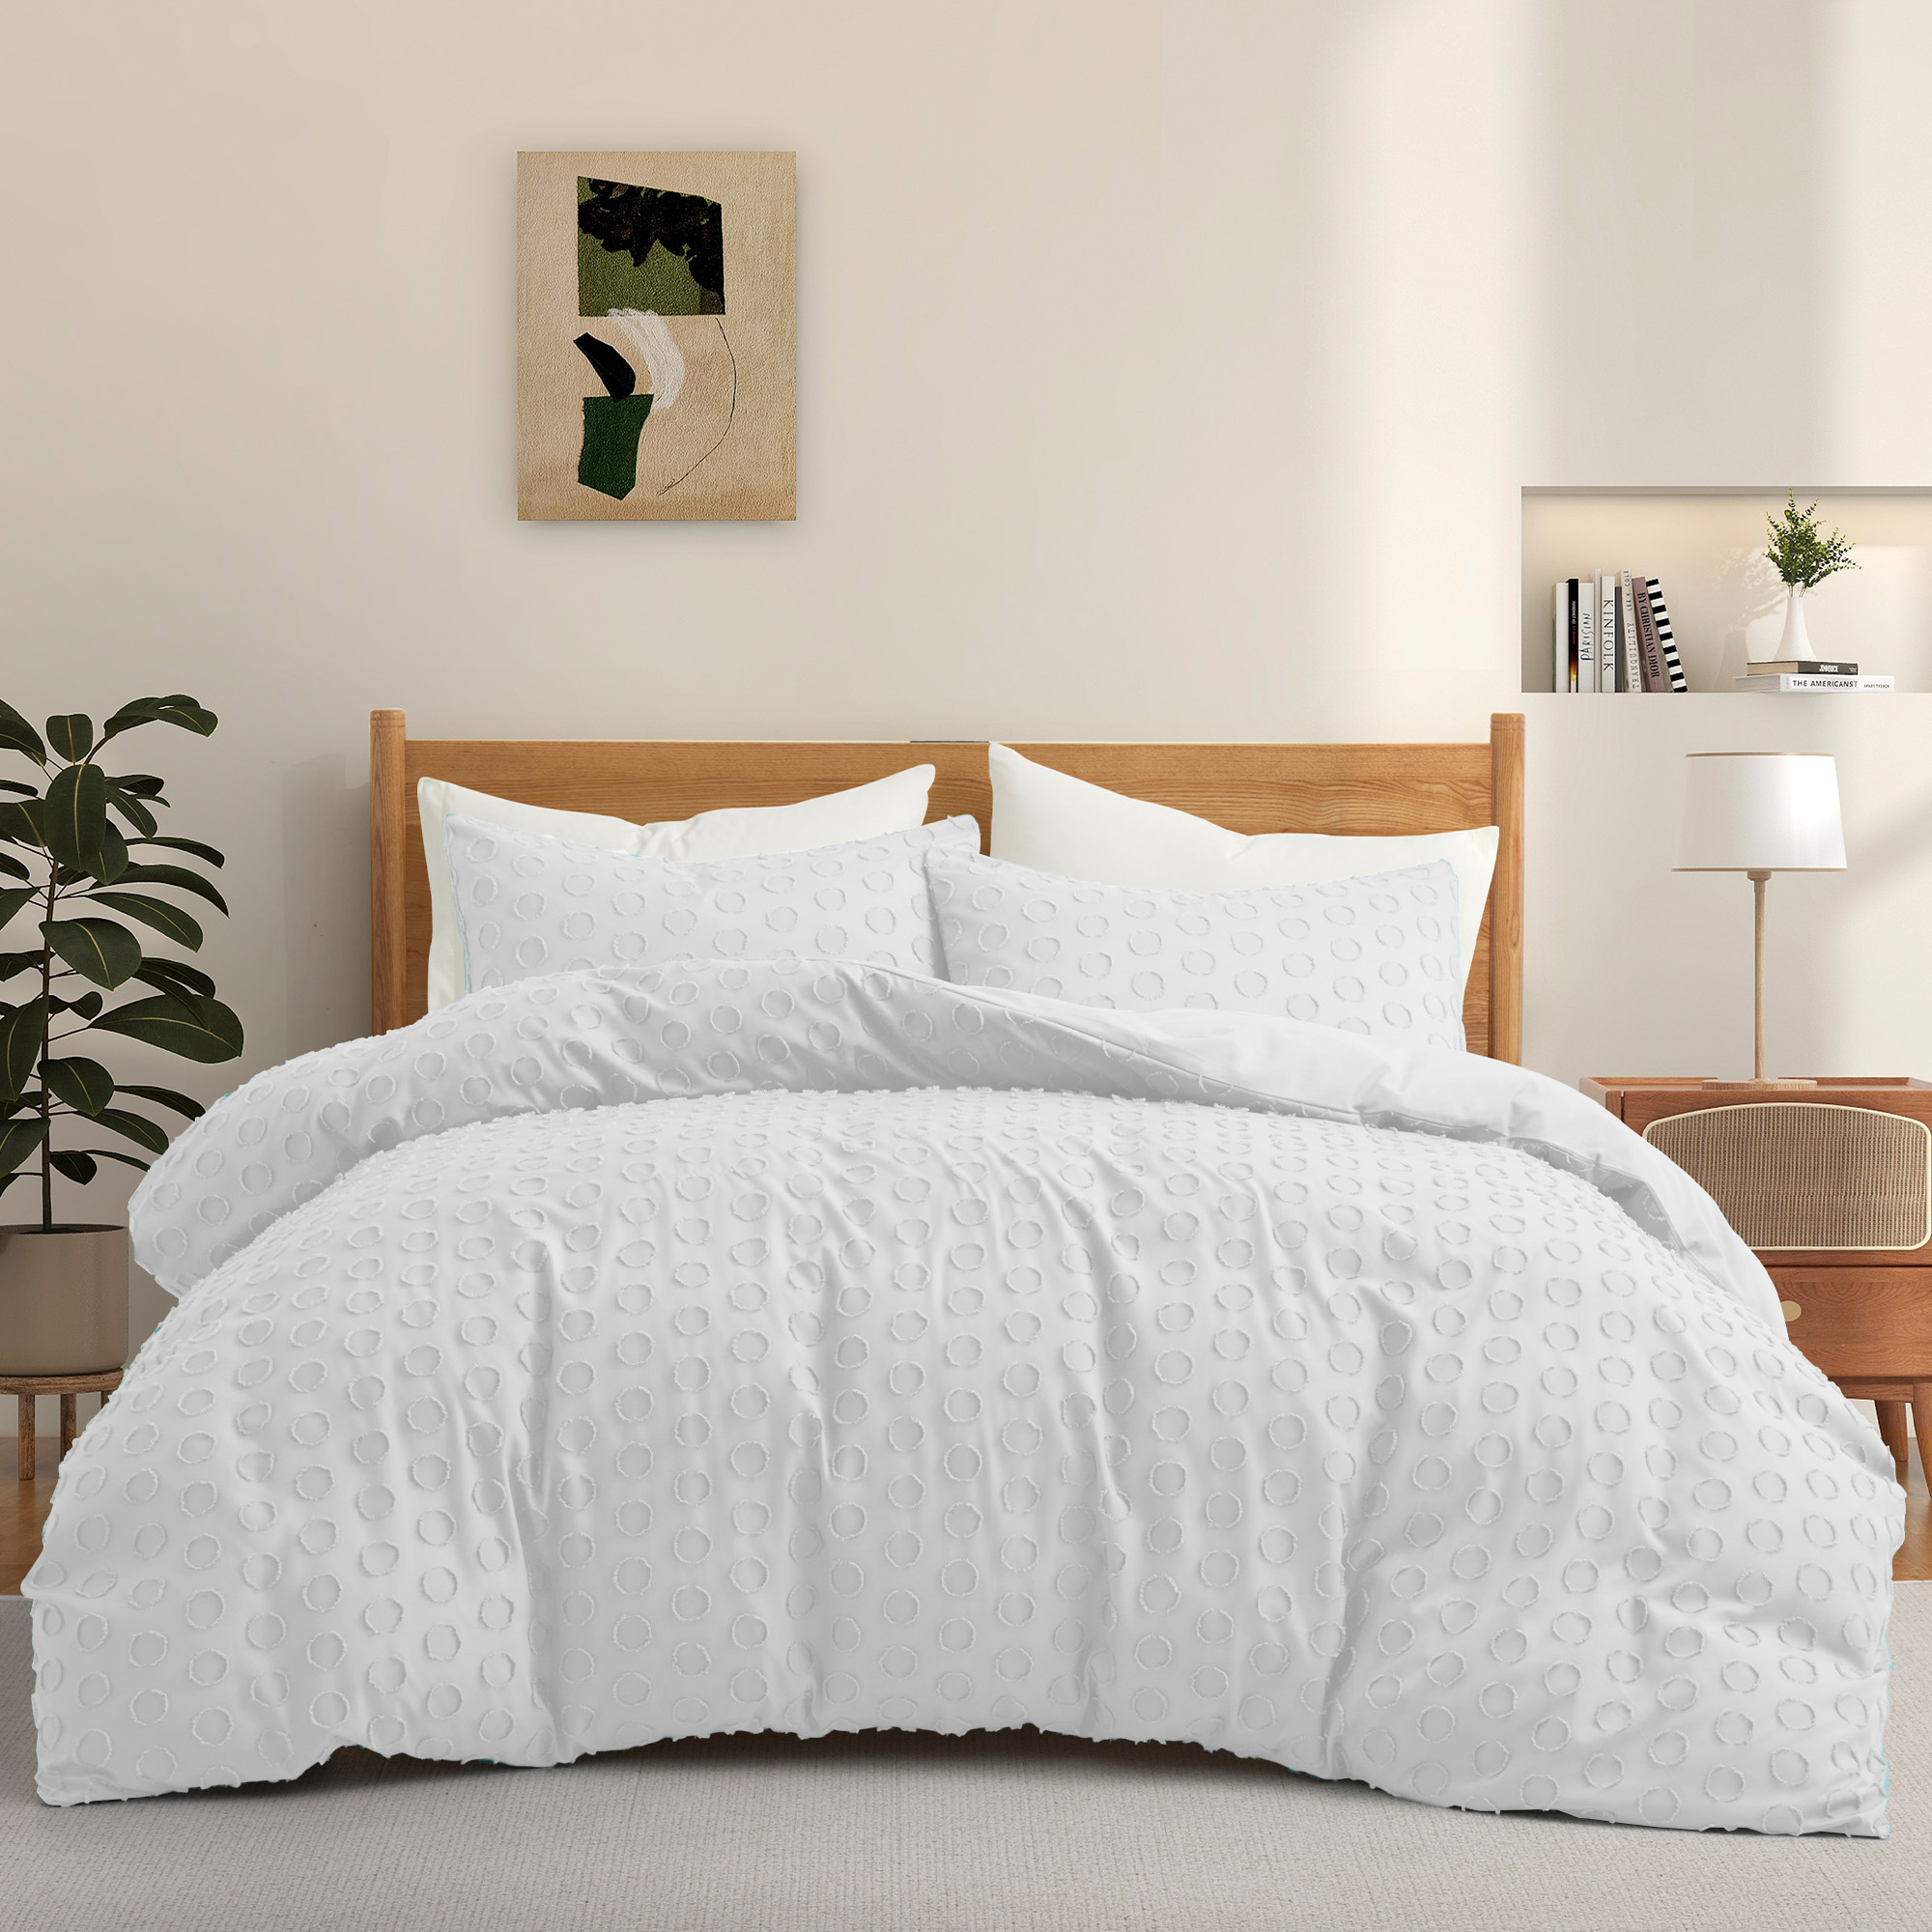 Luxury Bedding Soft Microfiber Duvet Cover And Sham Set - White, Twin